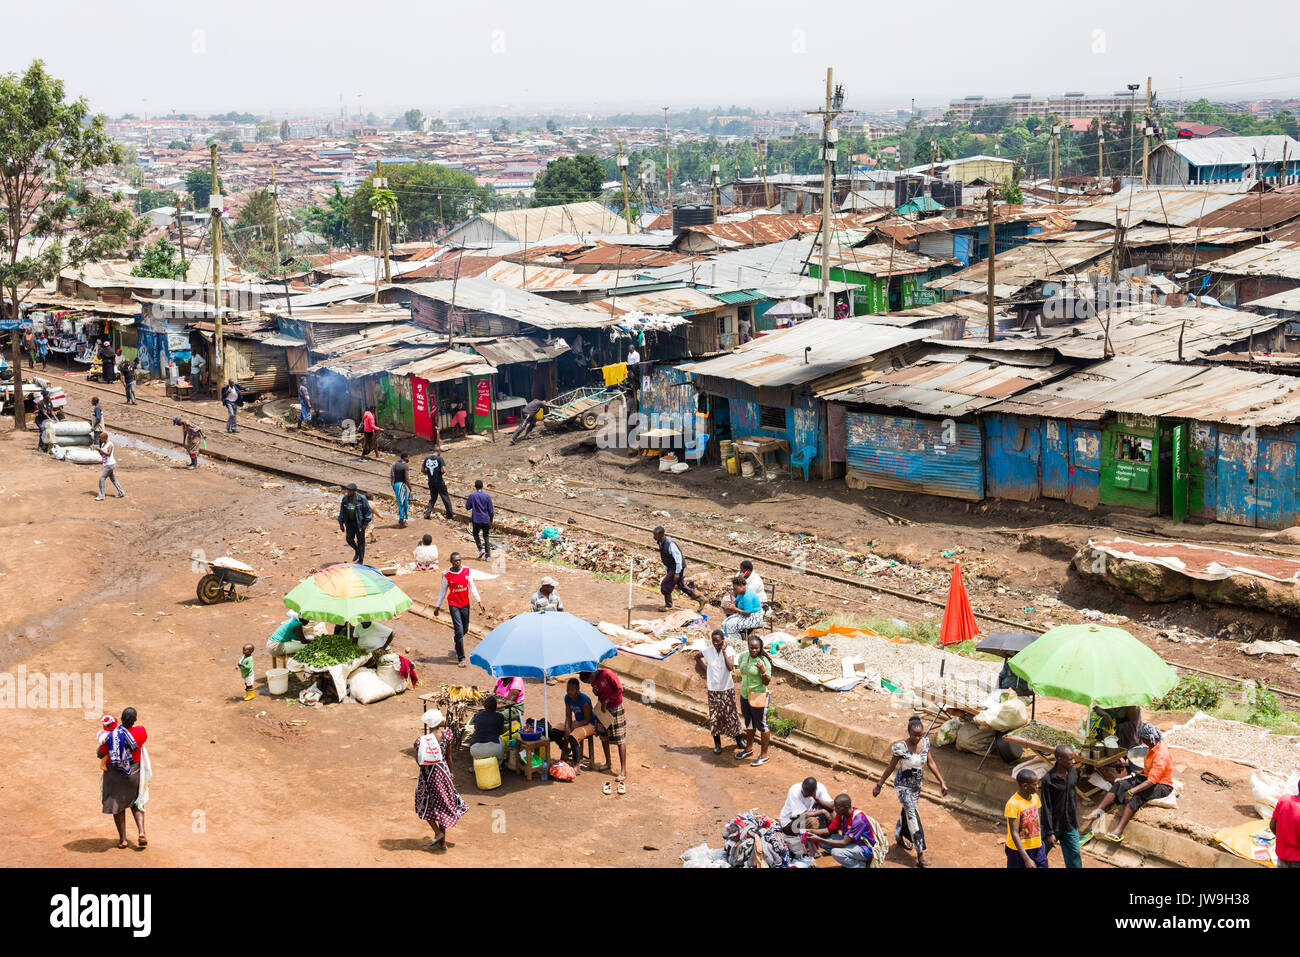 Kibera slum with inhabitants and shacks by railway line, Nairobi, Kenya Stock Photo